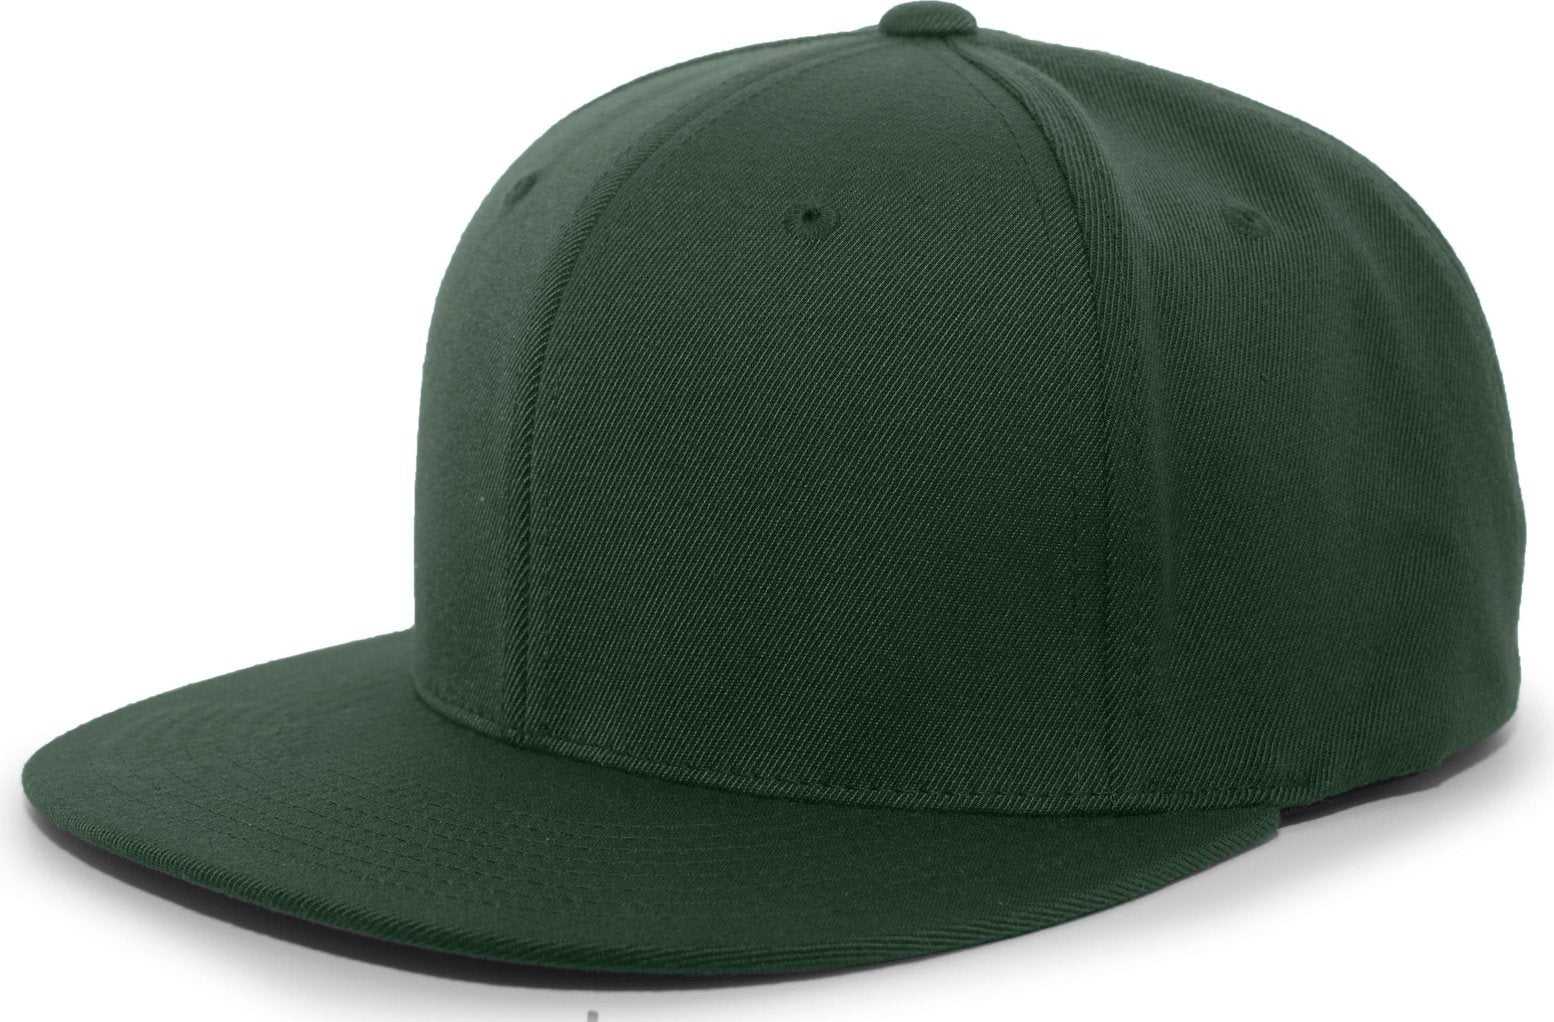 Pacific Headwear 8D5 A/C?ý Performance D-Series Flexfit Cap - Dark Green - HIT a Double